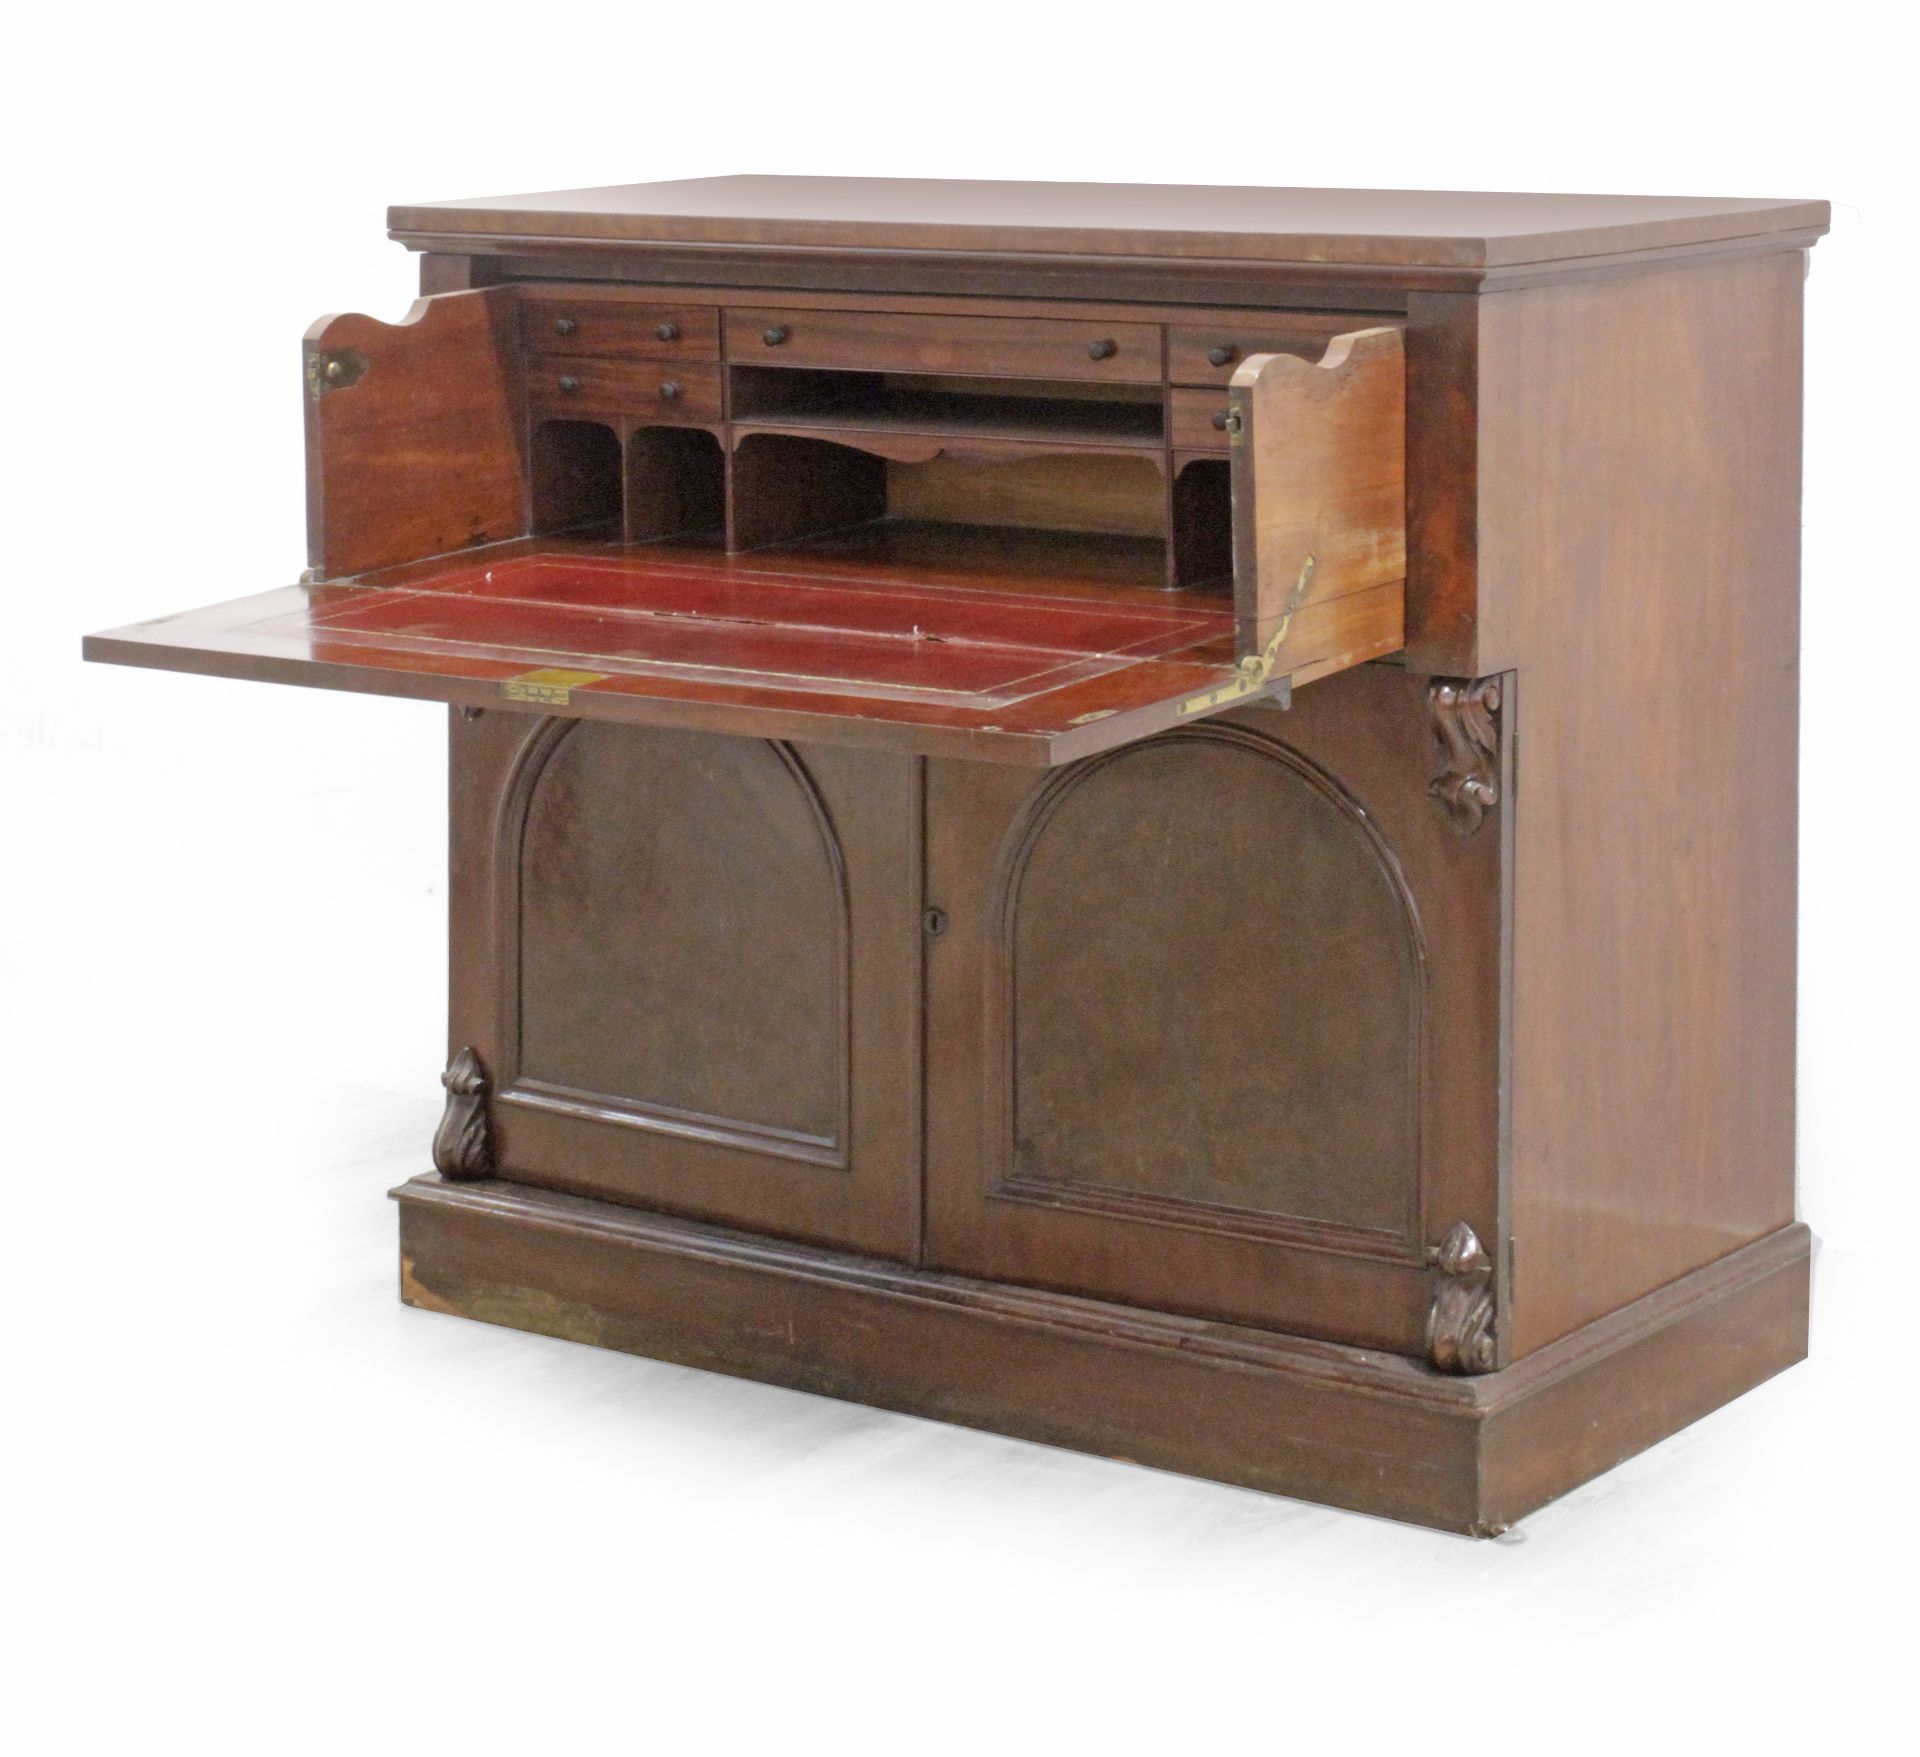 A 19th century Victorian mahogany sideboard